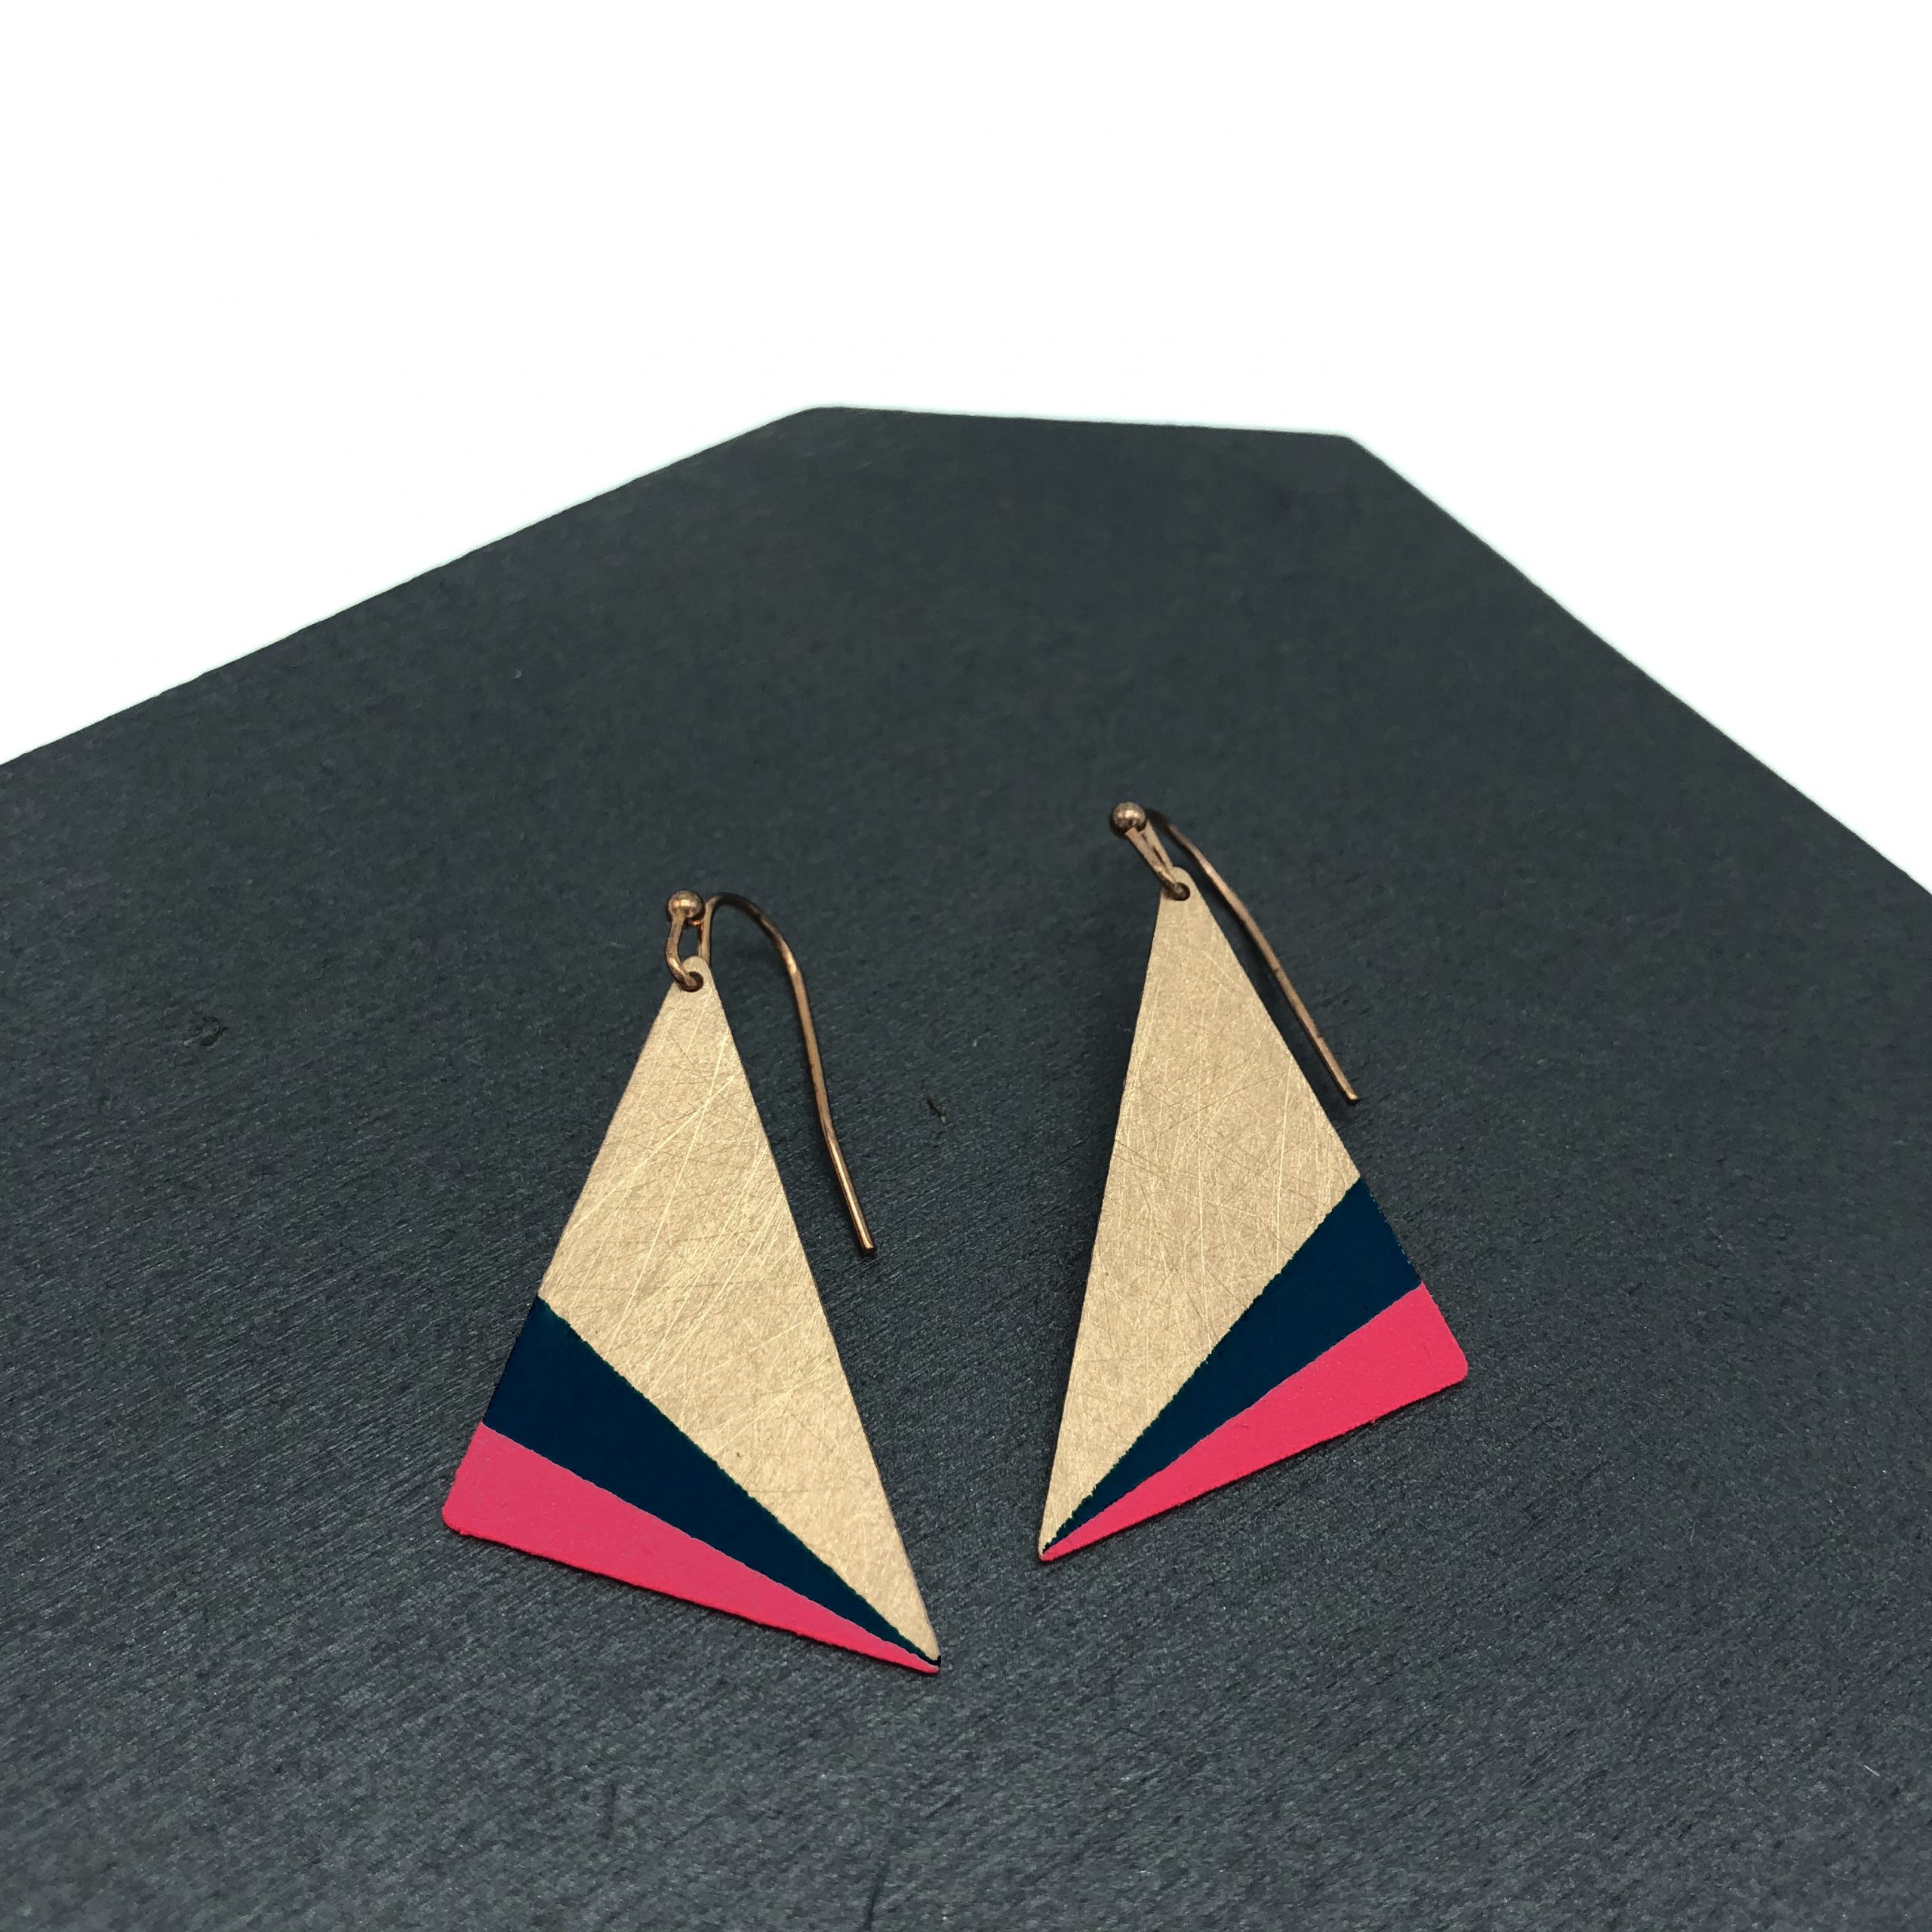 Dreieck Ohrhänger lackiert marine pink ruby on tuesday